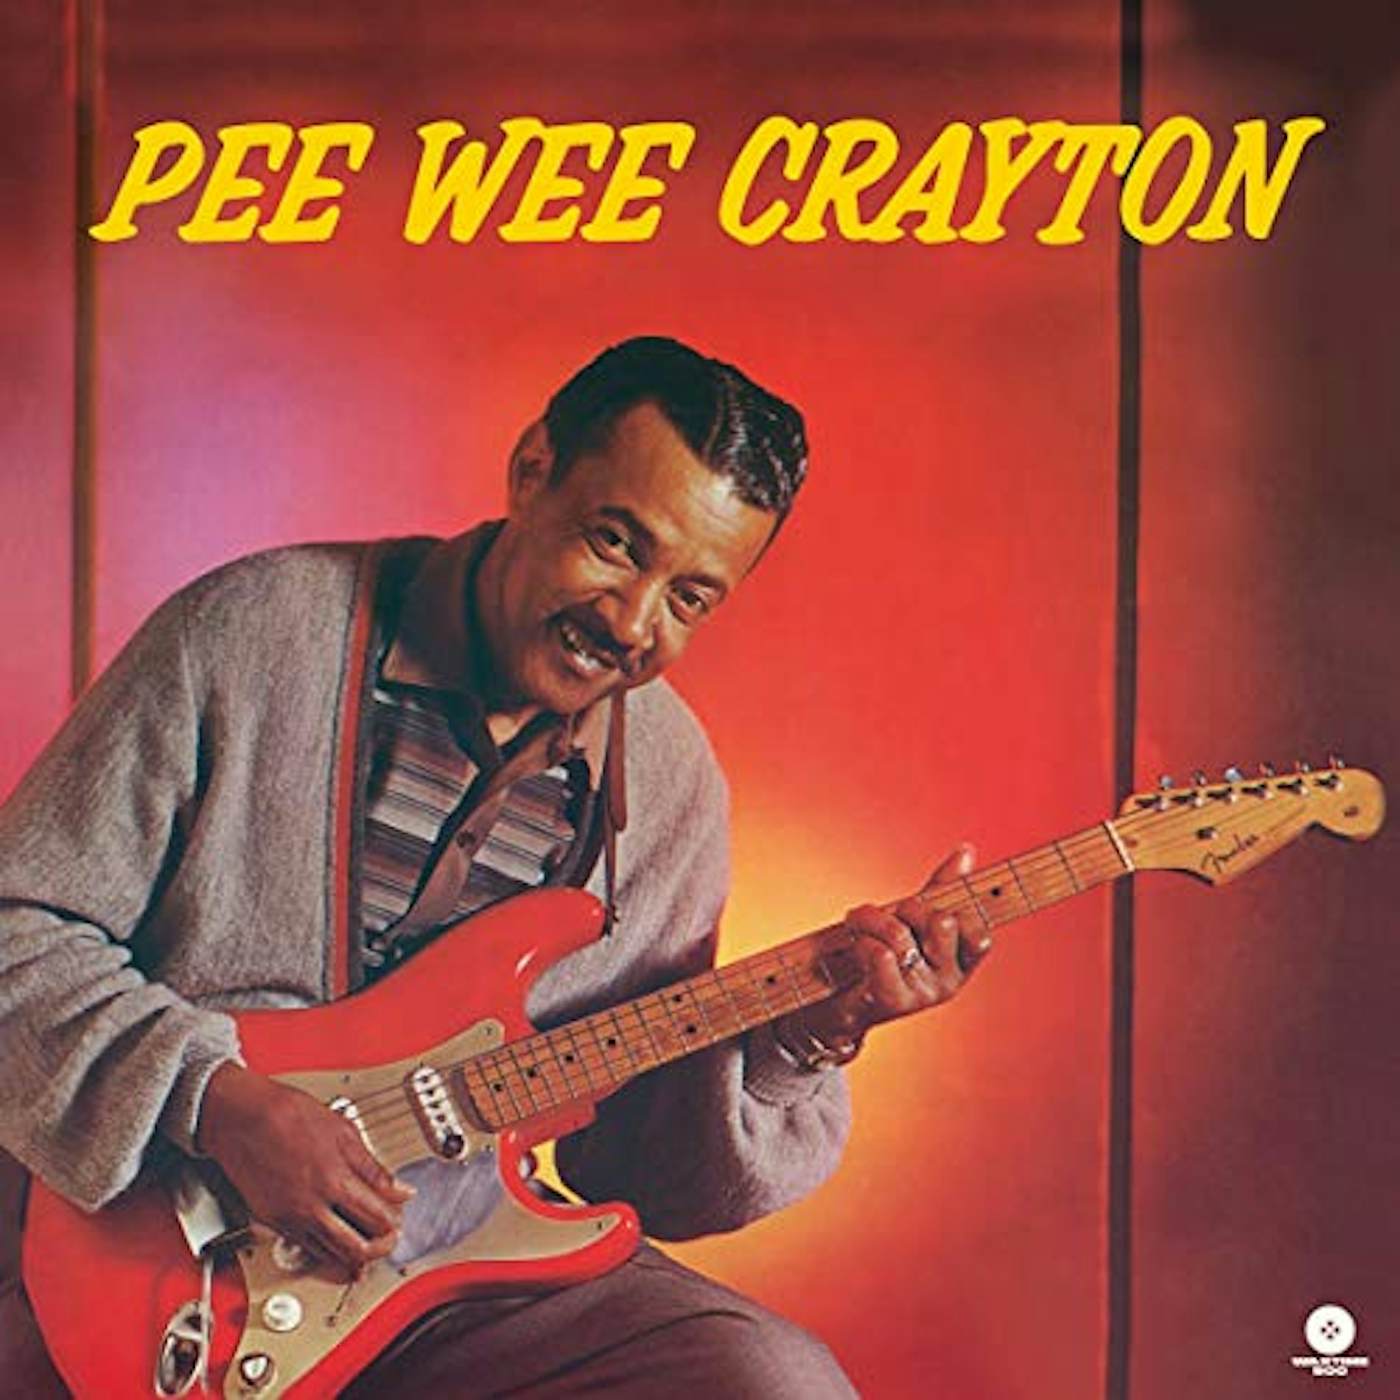 Pee Wee Crayton 1960 DEBUT ALBUM (AUDP) (BONUS TRACKS) Vinyl Record - Limited Edition, 180 Gram Pressing